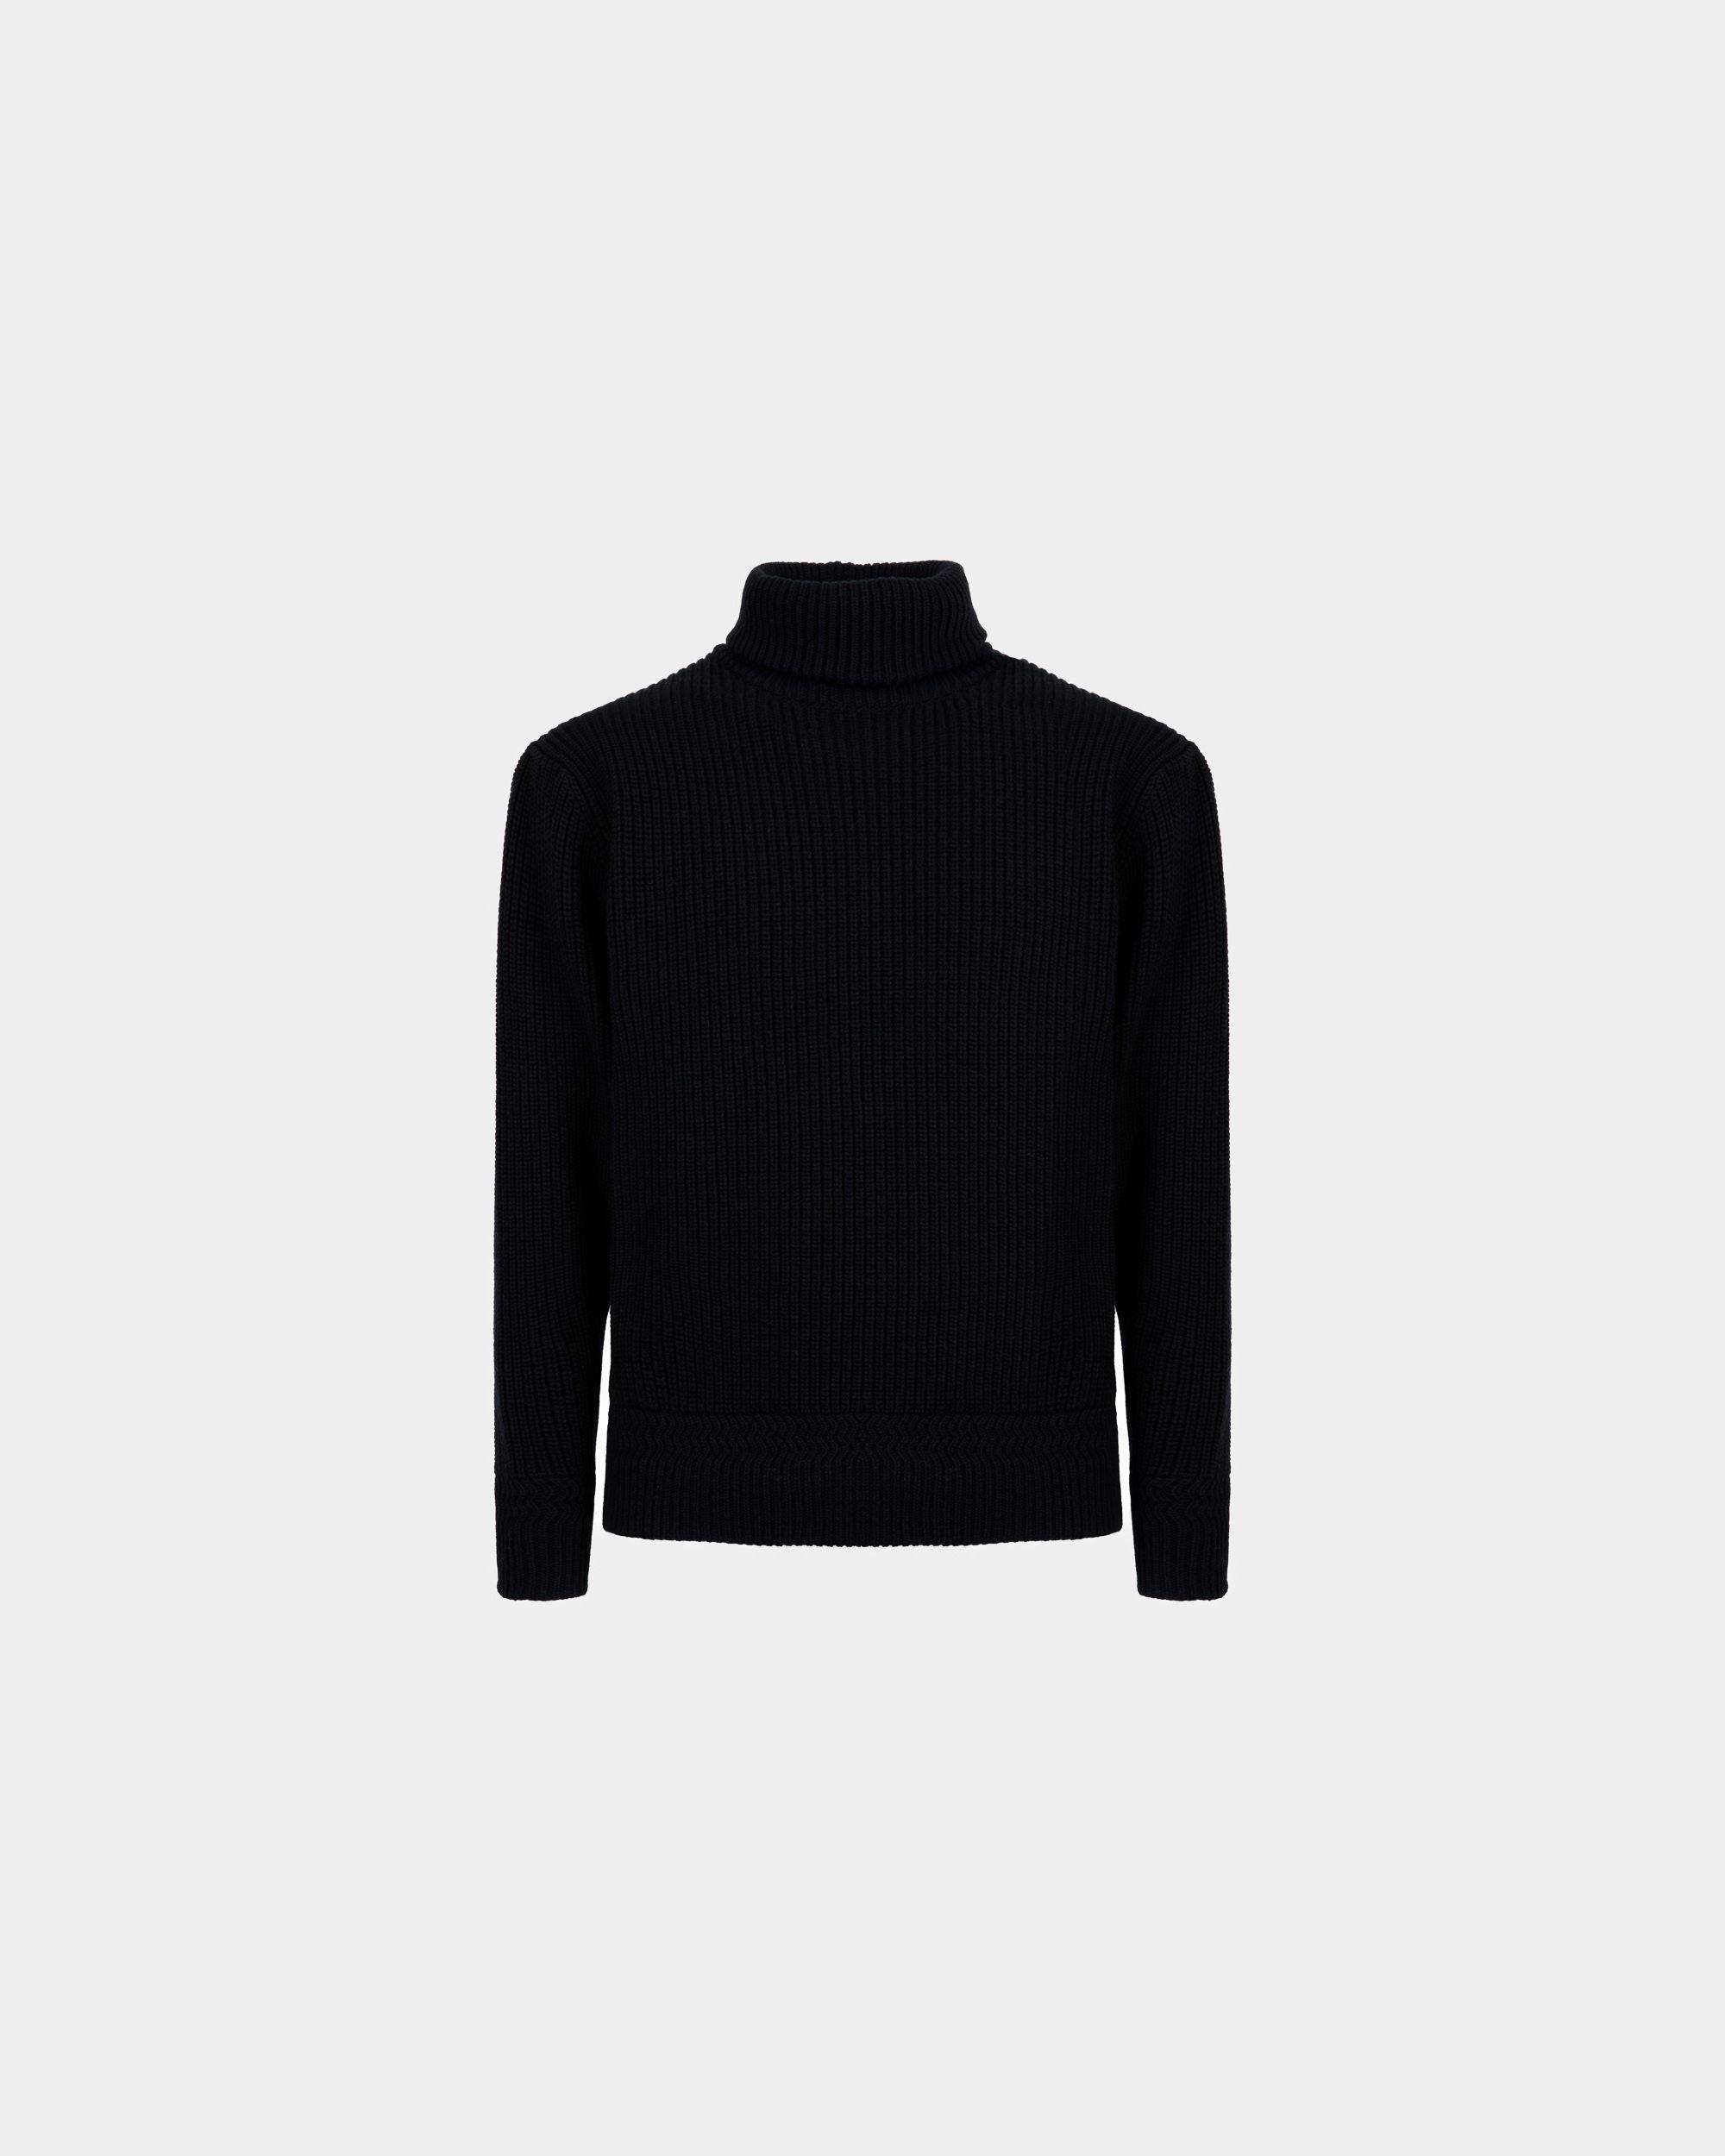 Men's Turtleneck Sweater In Dark Blue Wool | Bally | Still Life Front